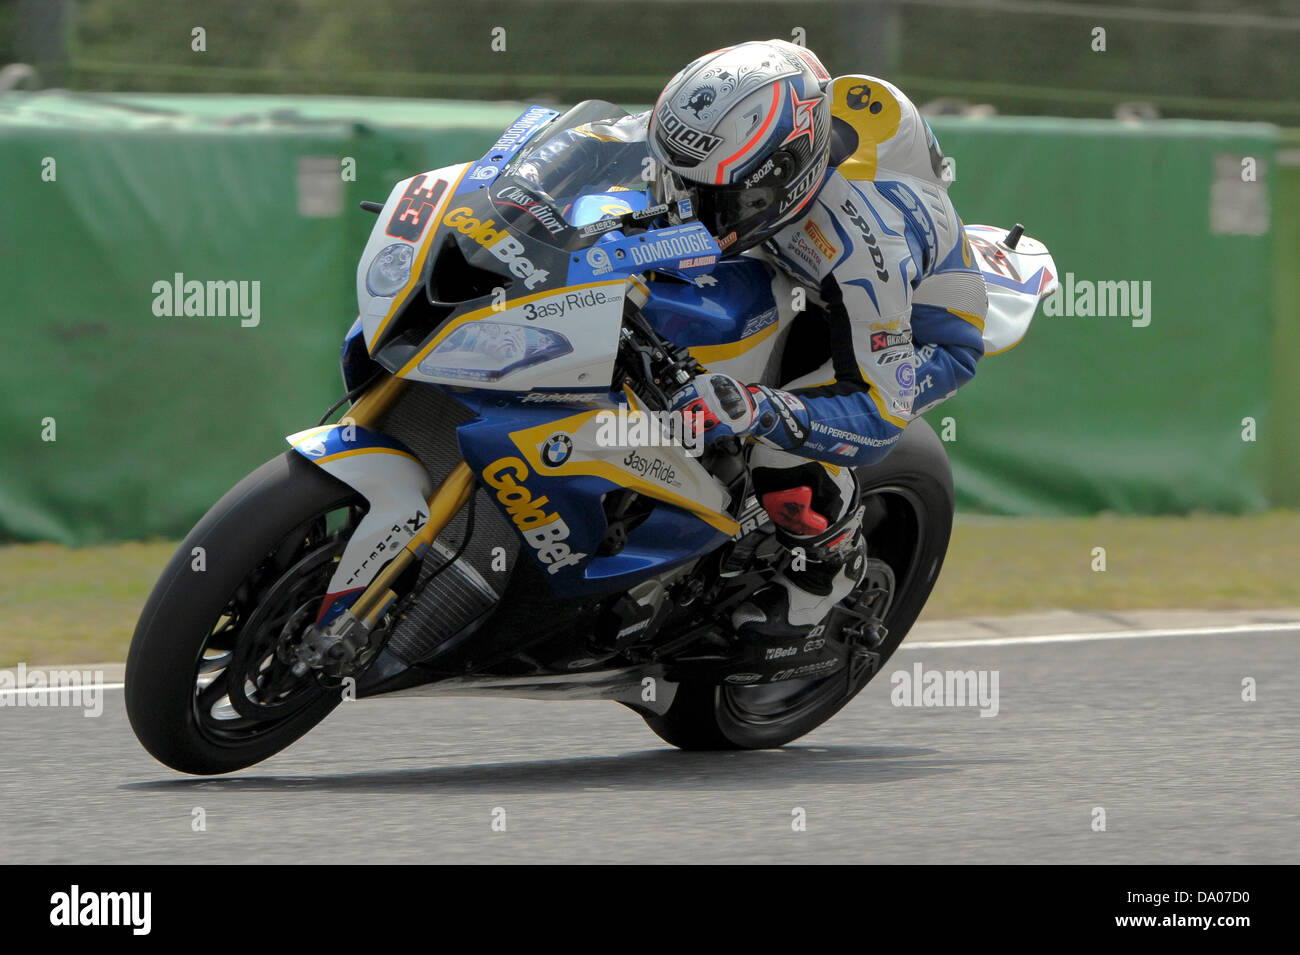 Imola, Italy. 29th June 2013. MArco Melandri during the World Superbikes Championships from Imola. Stock Photo